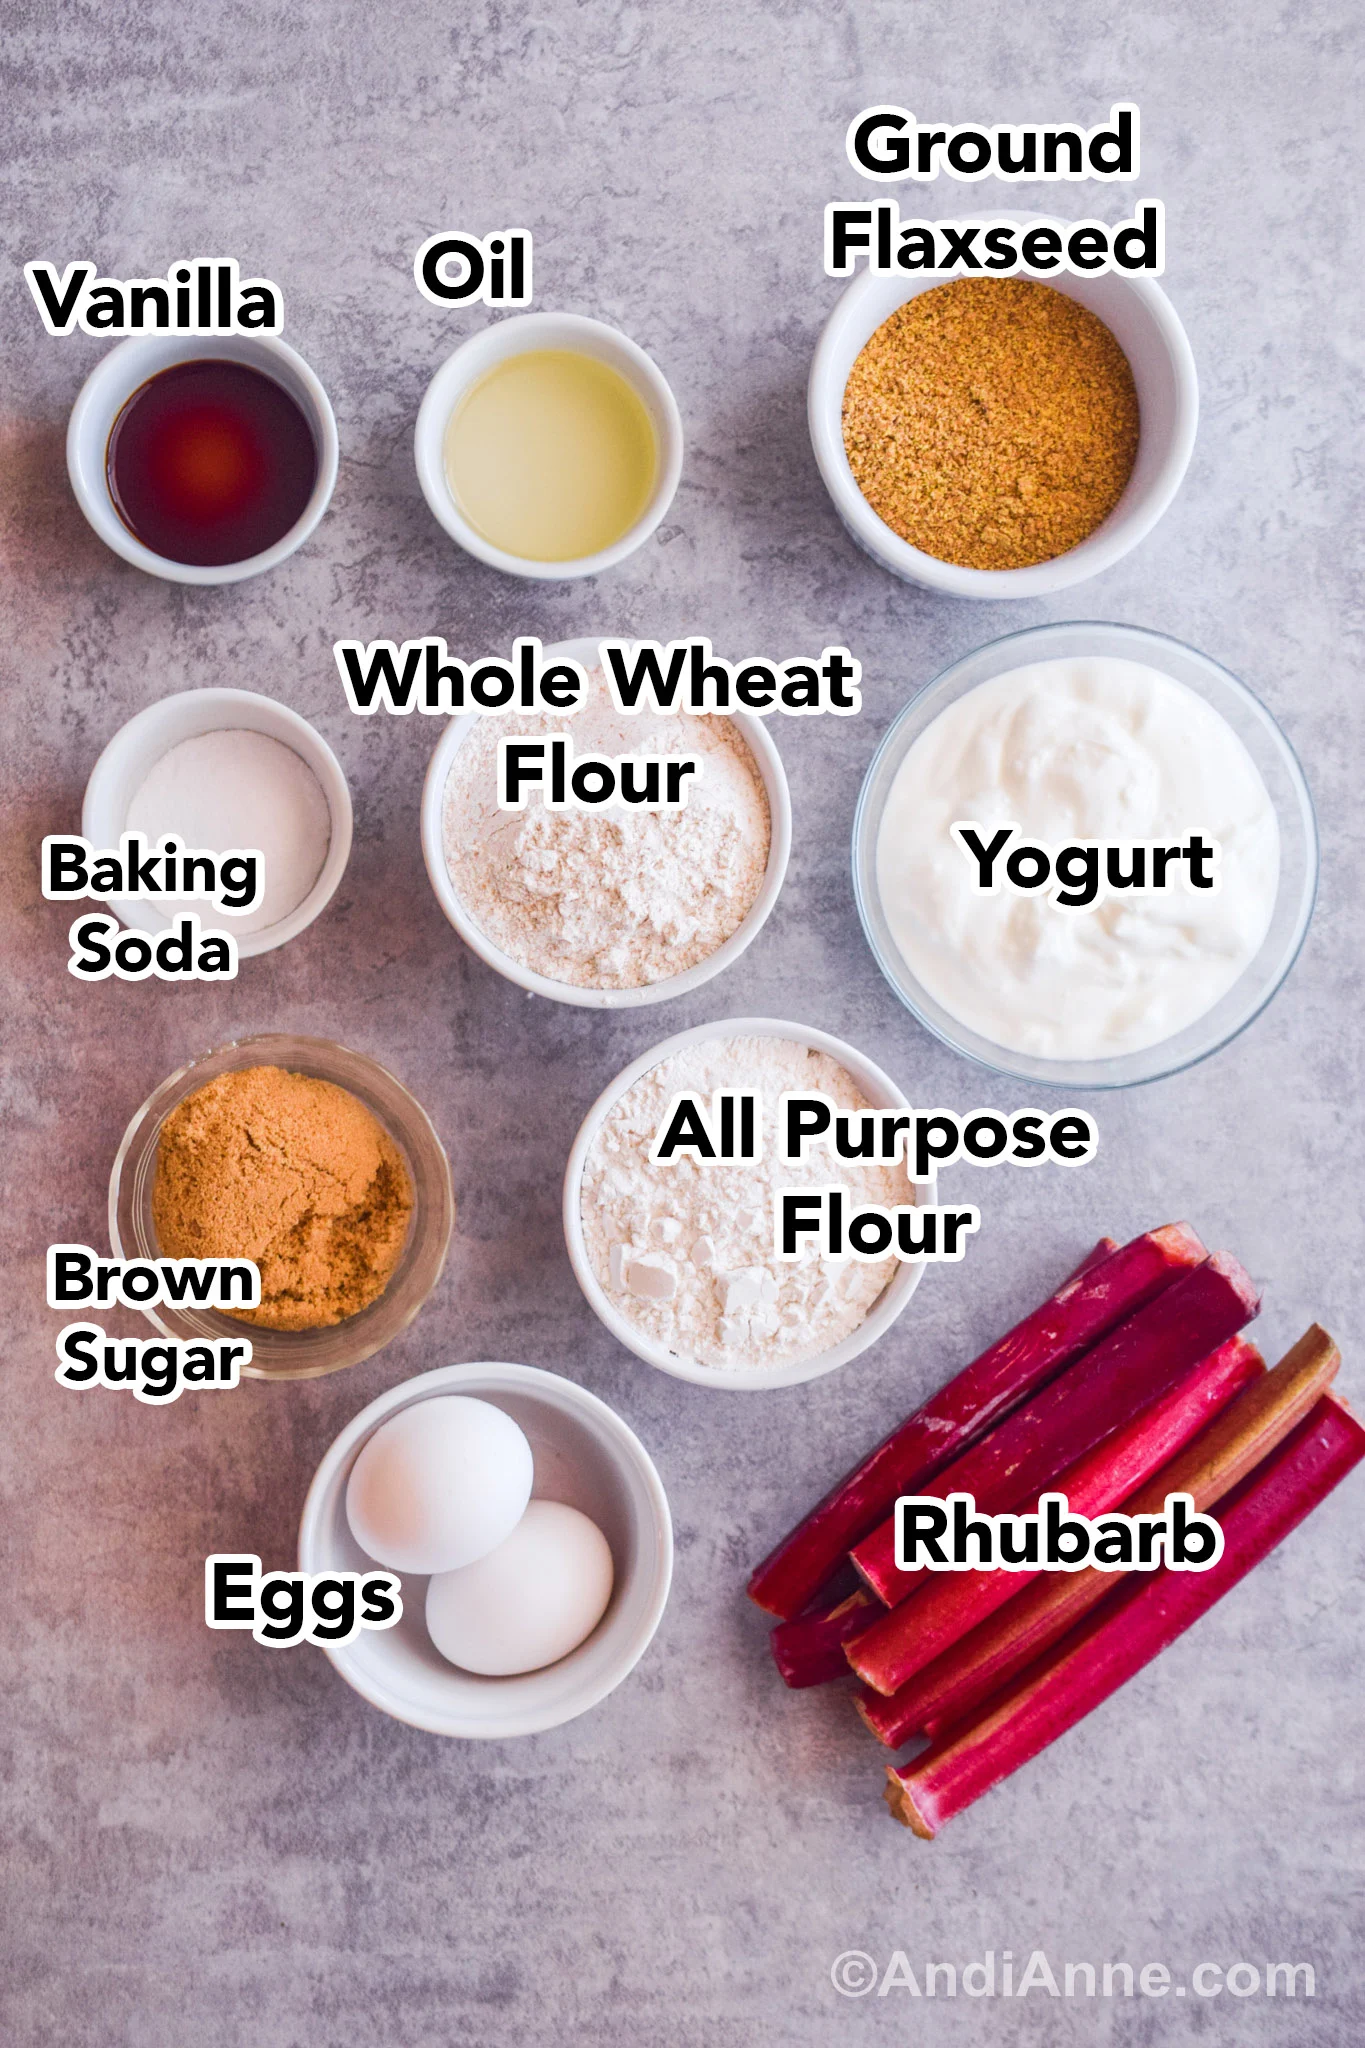 Recipe ingredients on table including bowls of yogurt, flours, brown sugar, eggs and sticks of rhubarb.